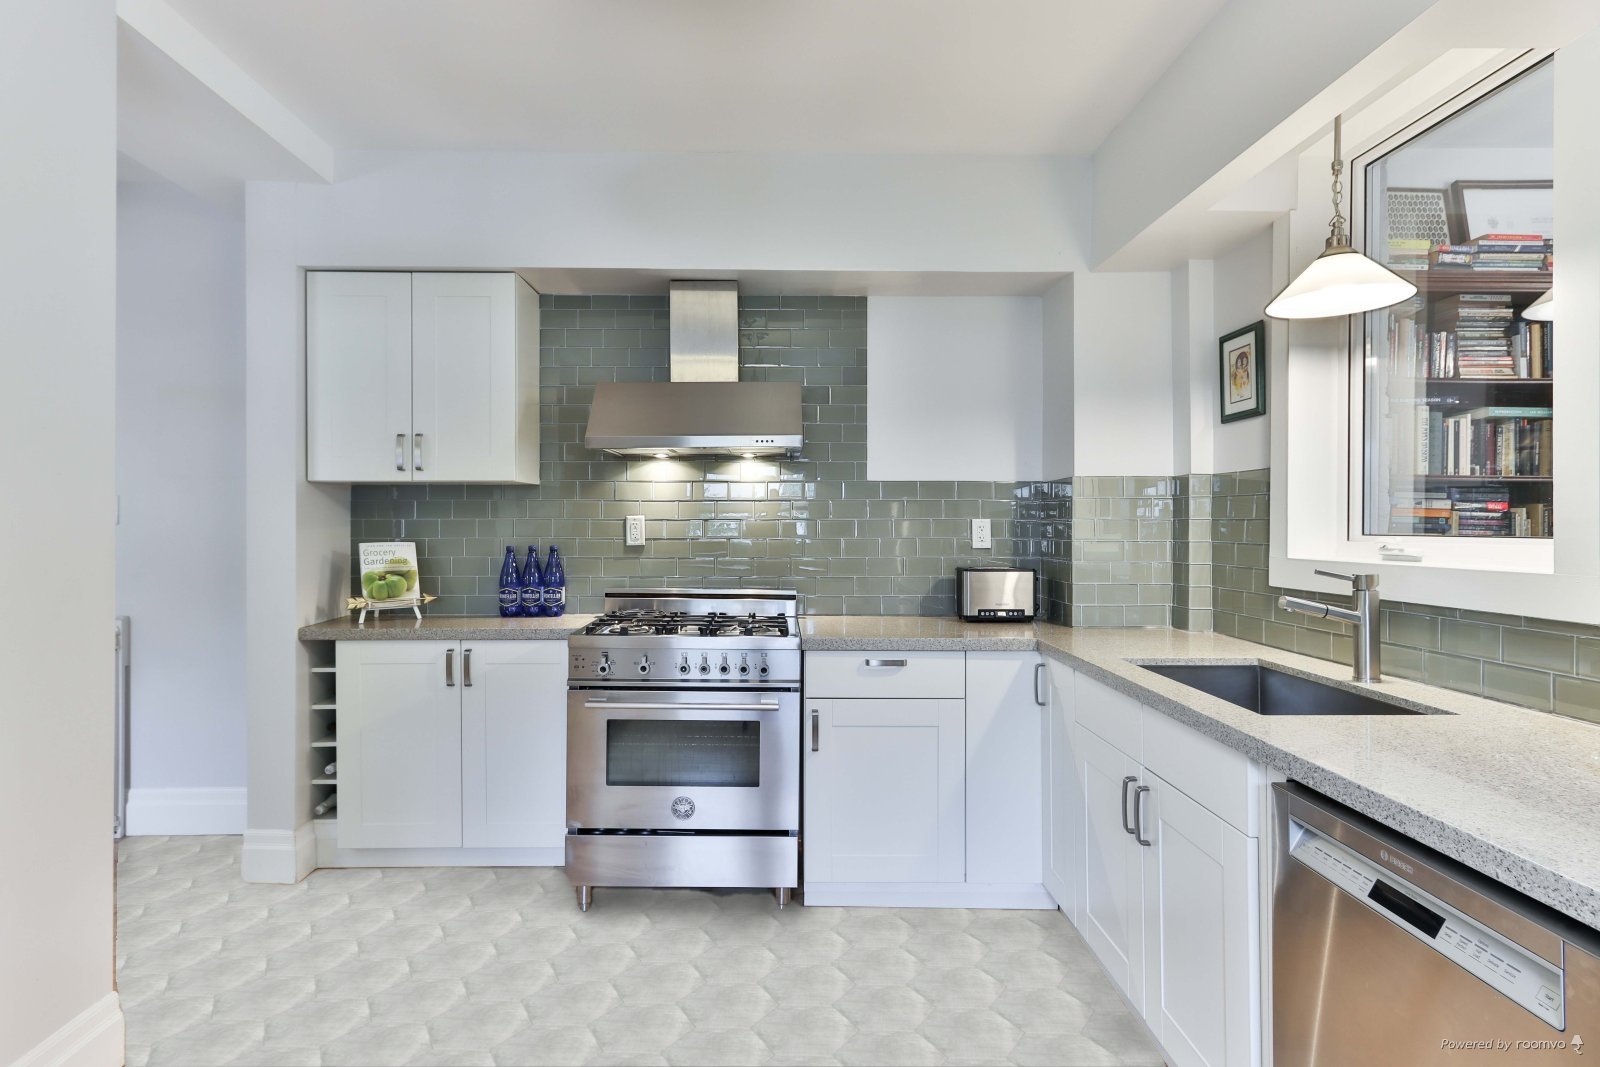 Which Kitchen Floor Tiles Are Best Top, White Tile Kitchen Floor